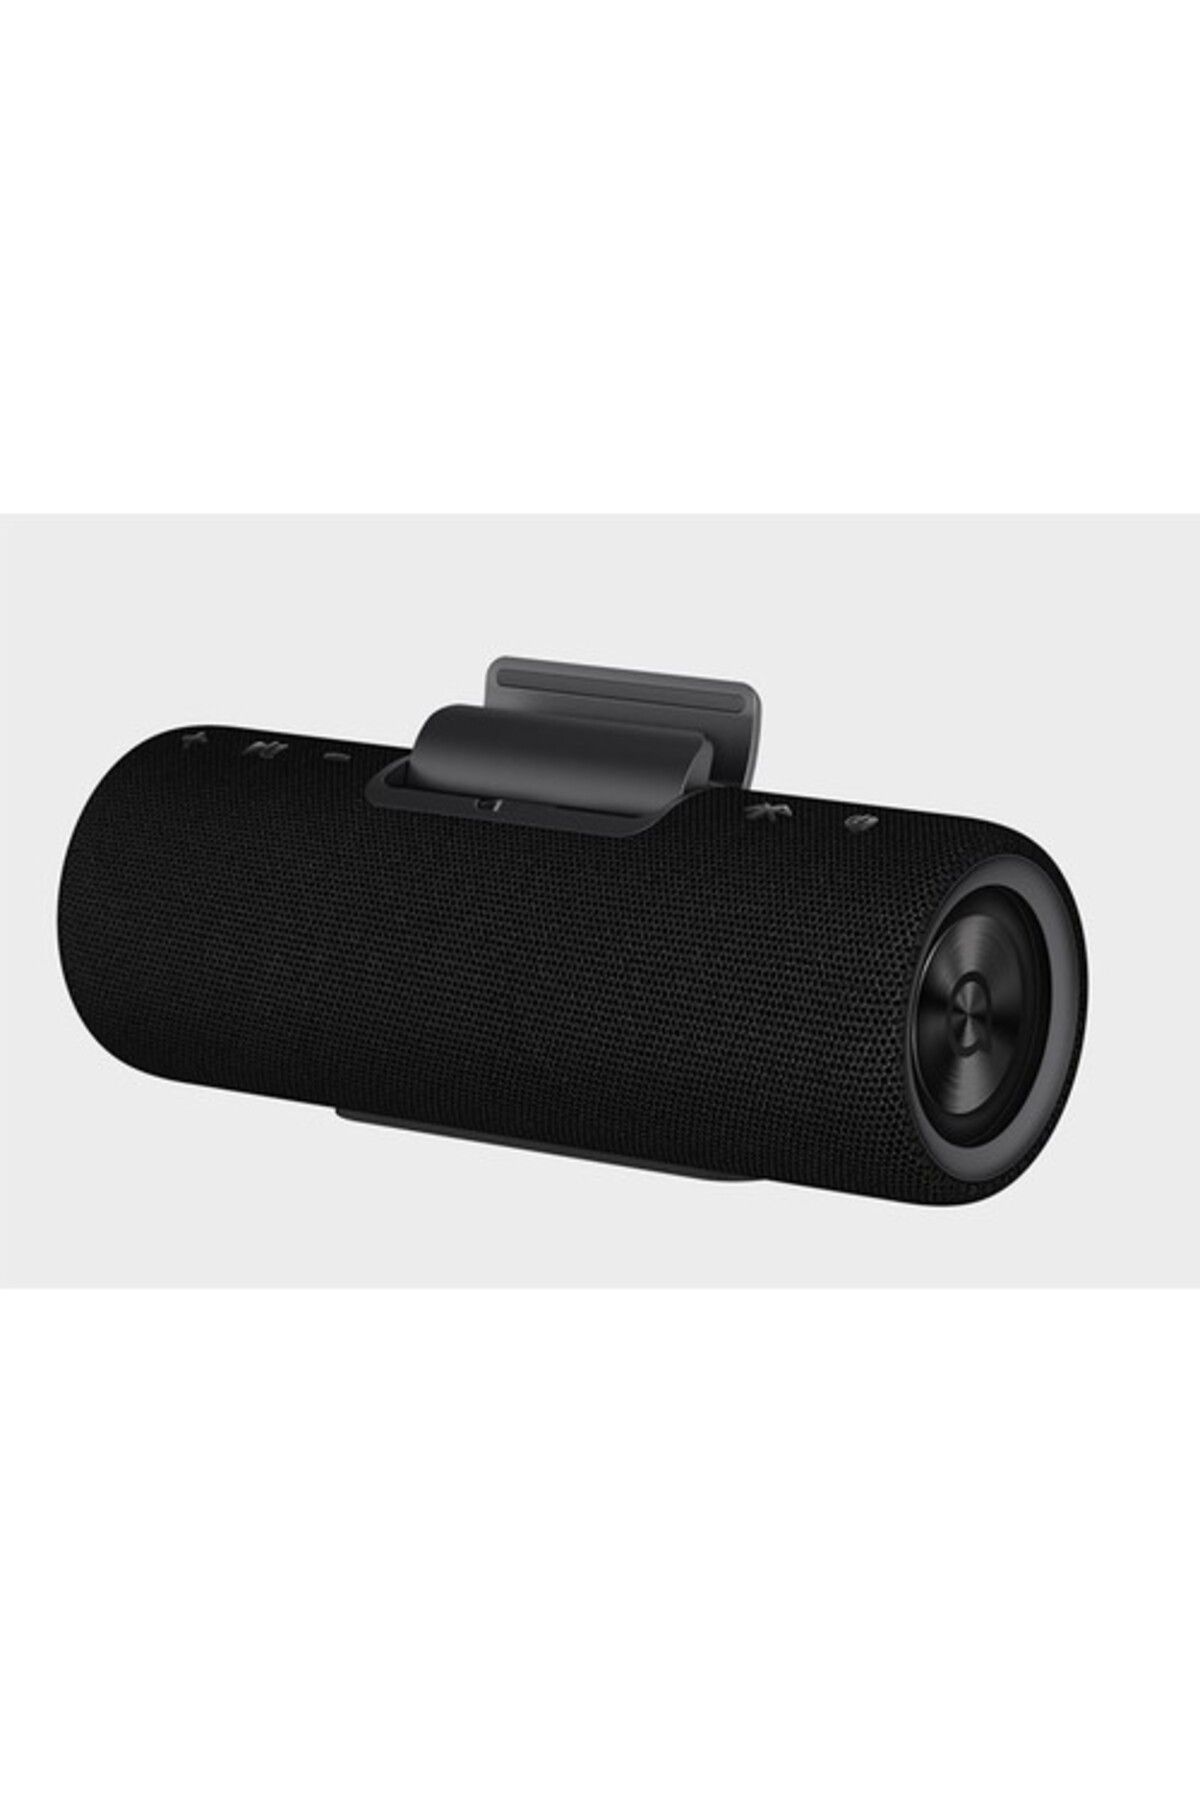 Alcatel (SK8088G-2AALTR1-1) Bluetooh Speaker Black